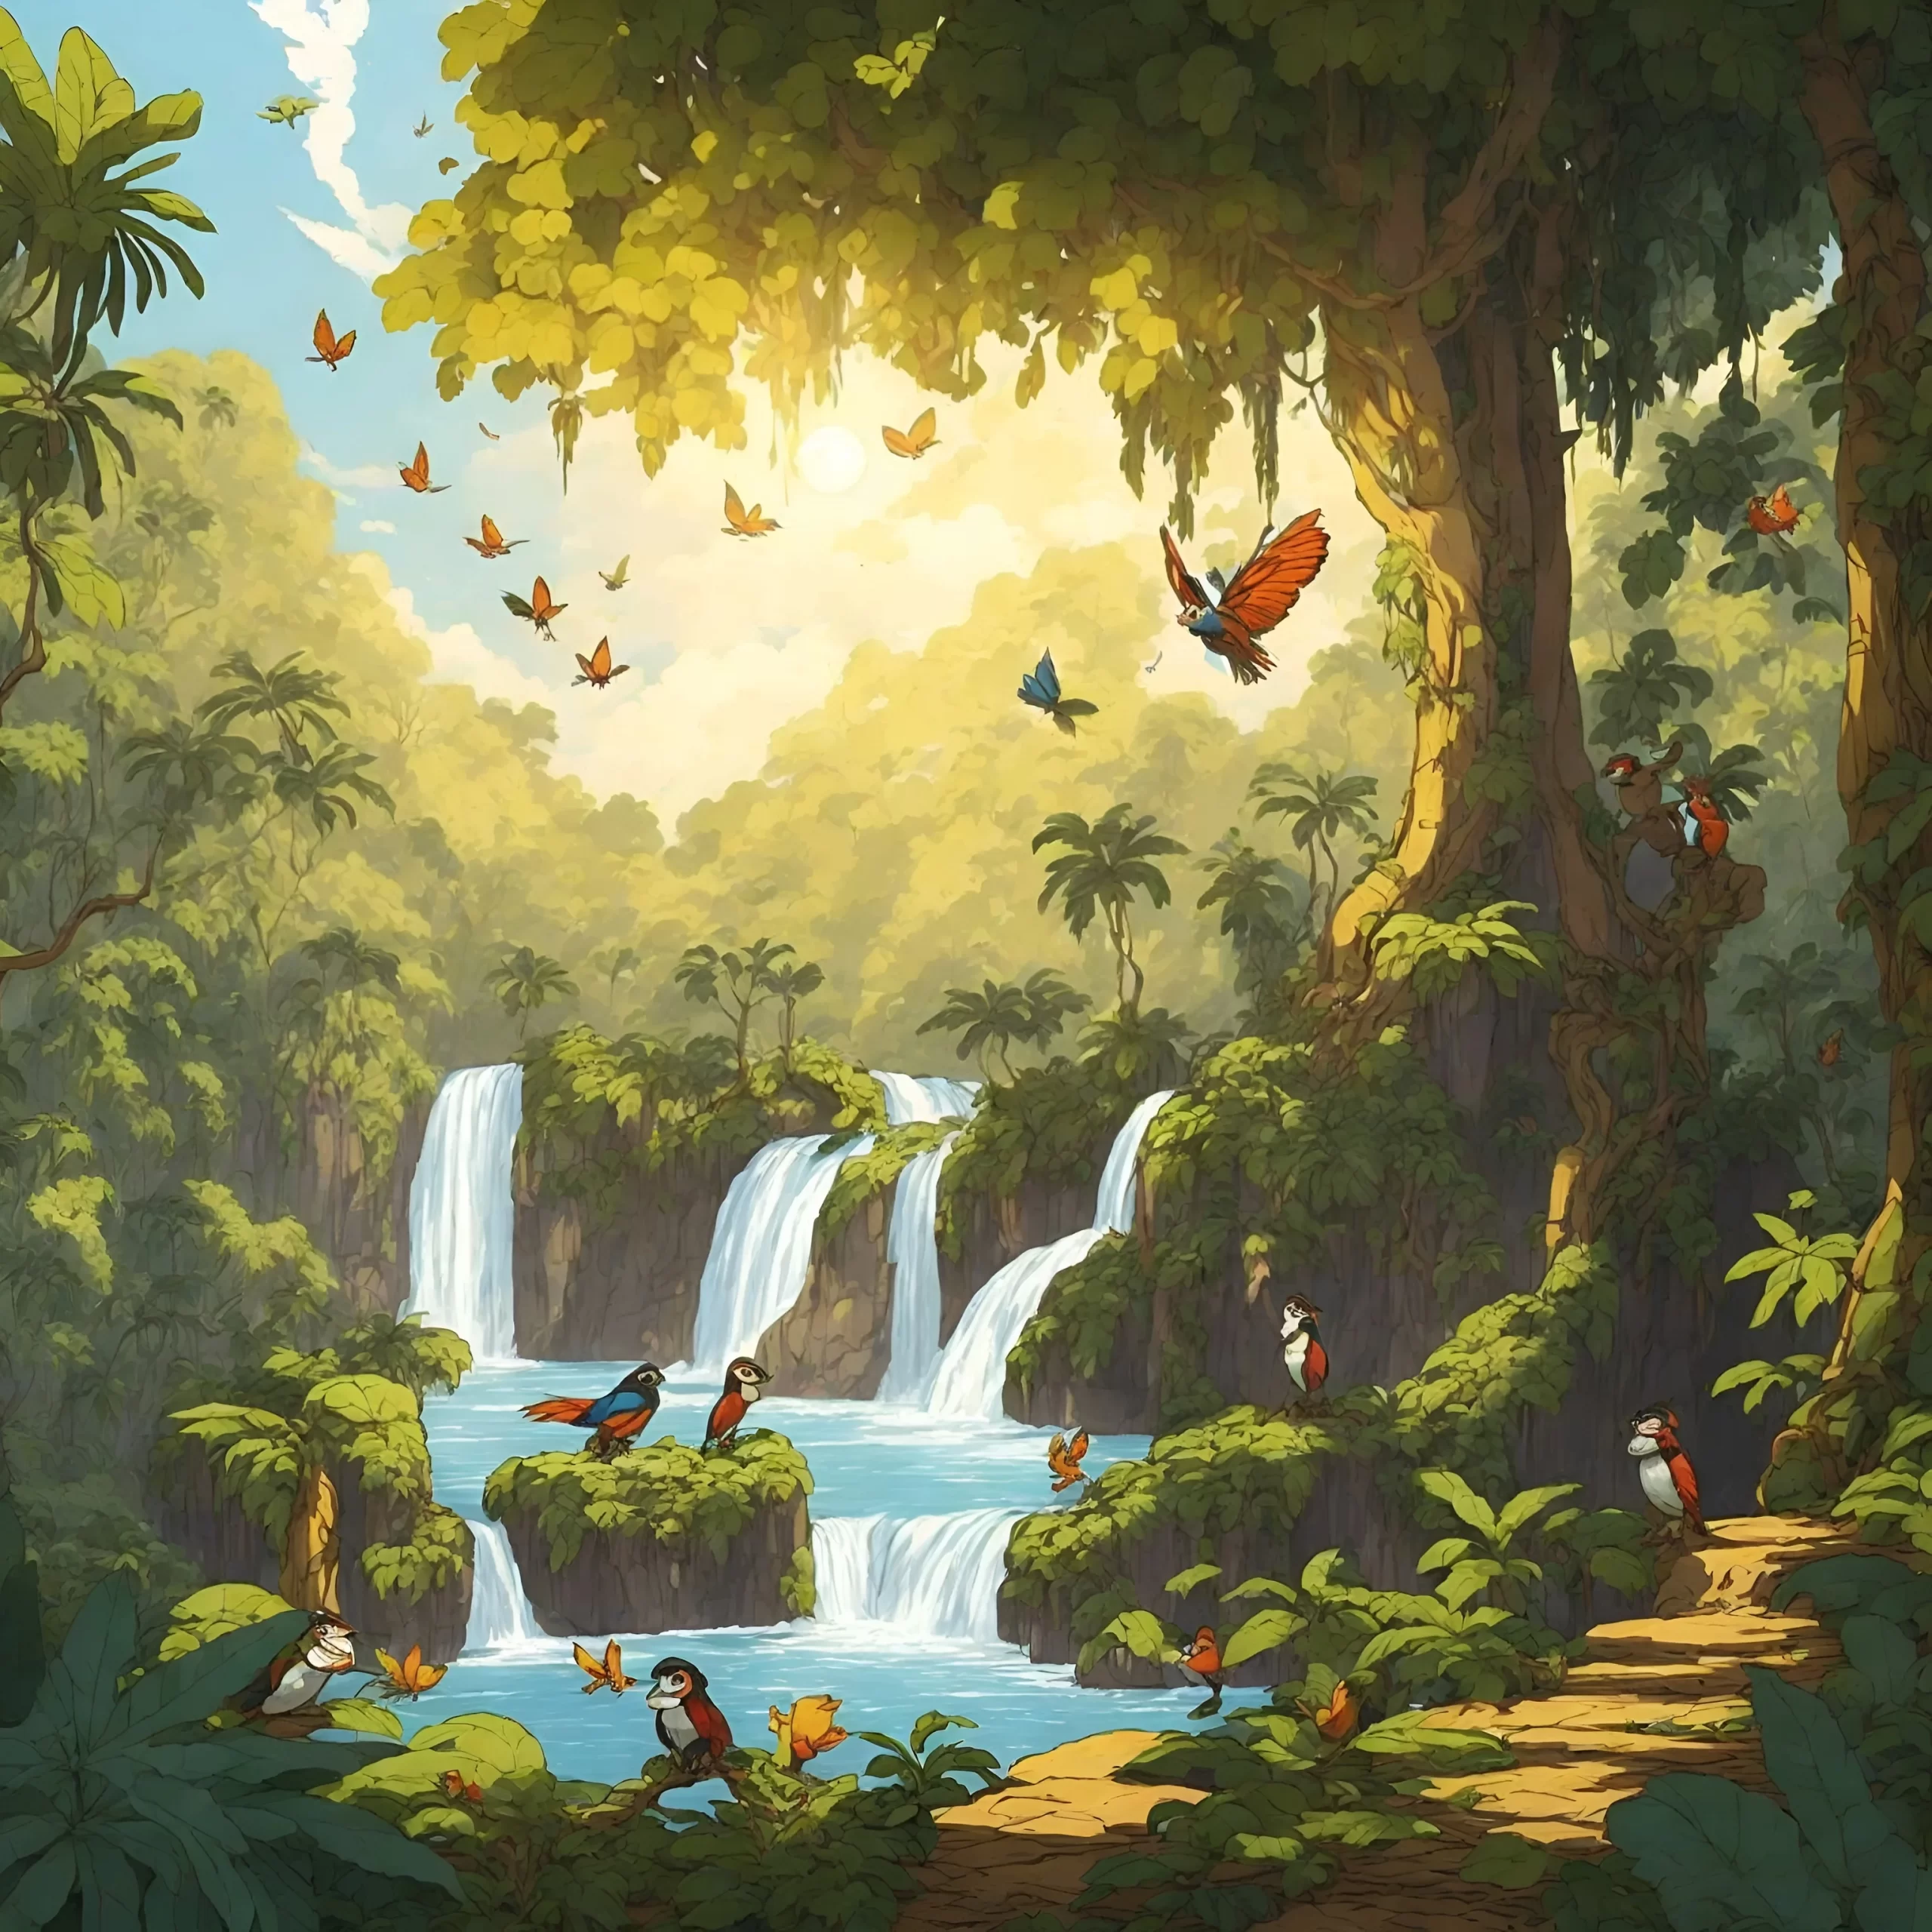 2d cartoon picture of a rainforest